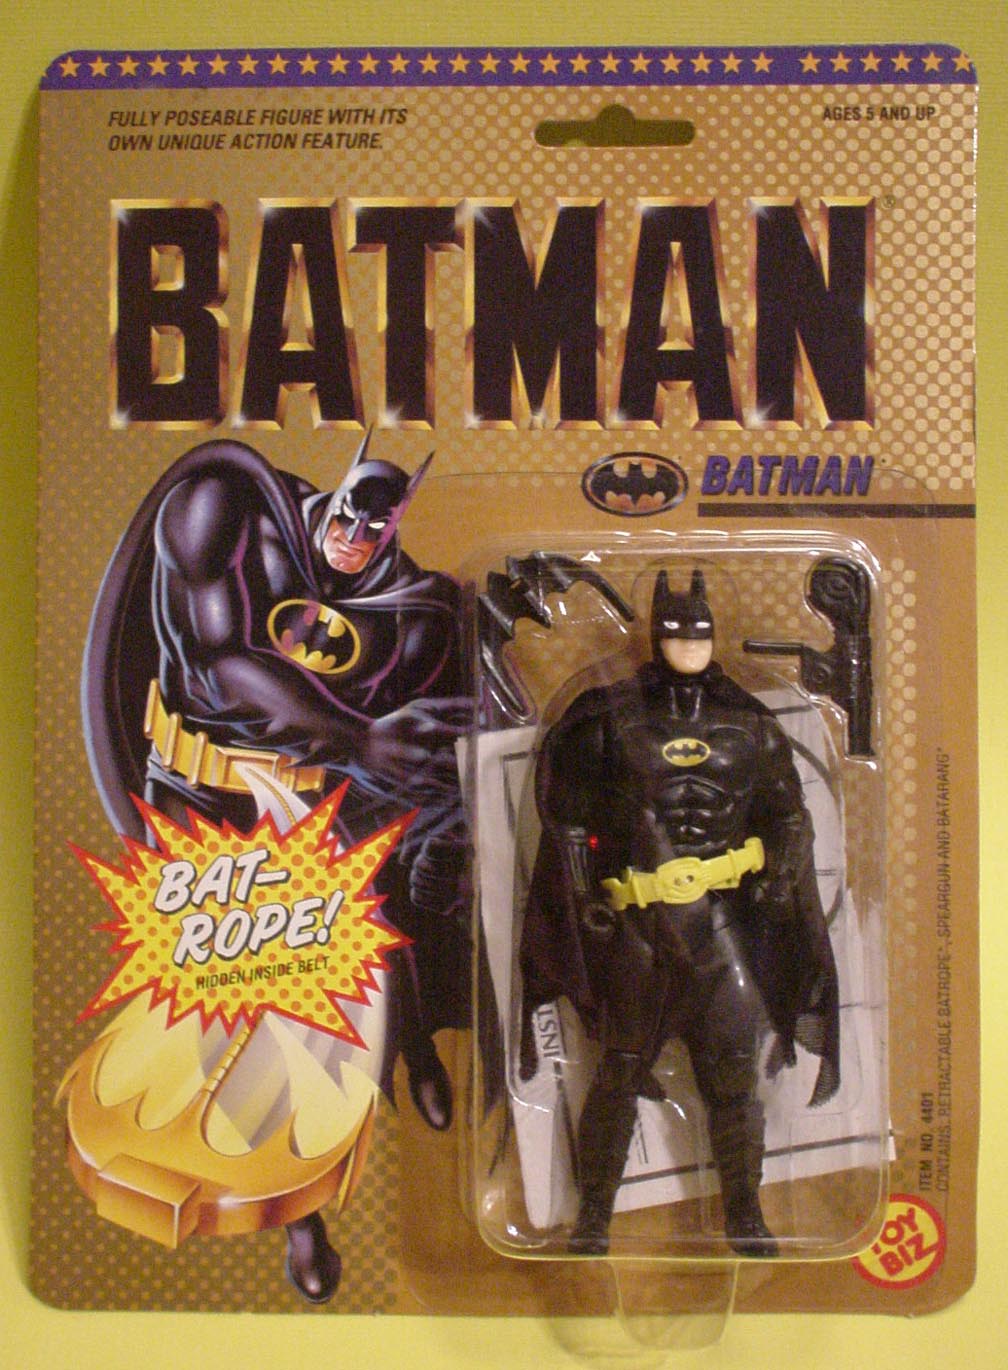 1989 toy biz batman